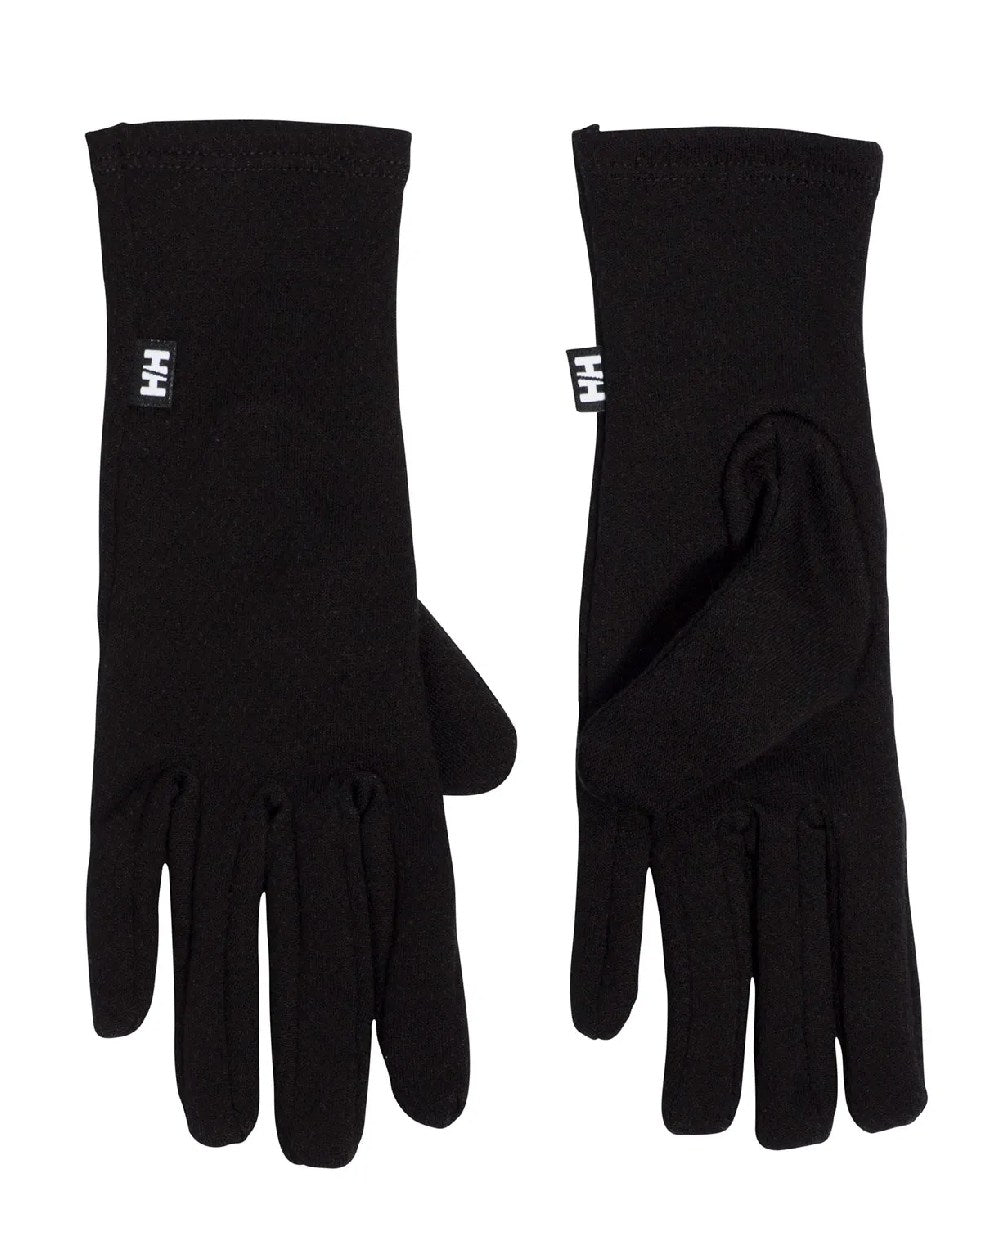 Helly Hansen Lifa Merino Glove Liner in Black